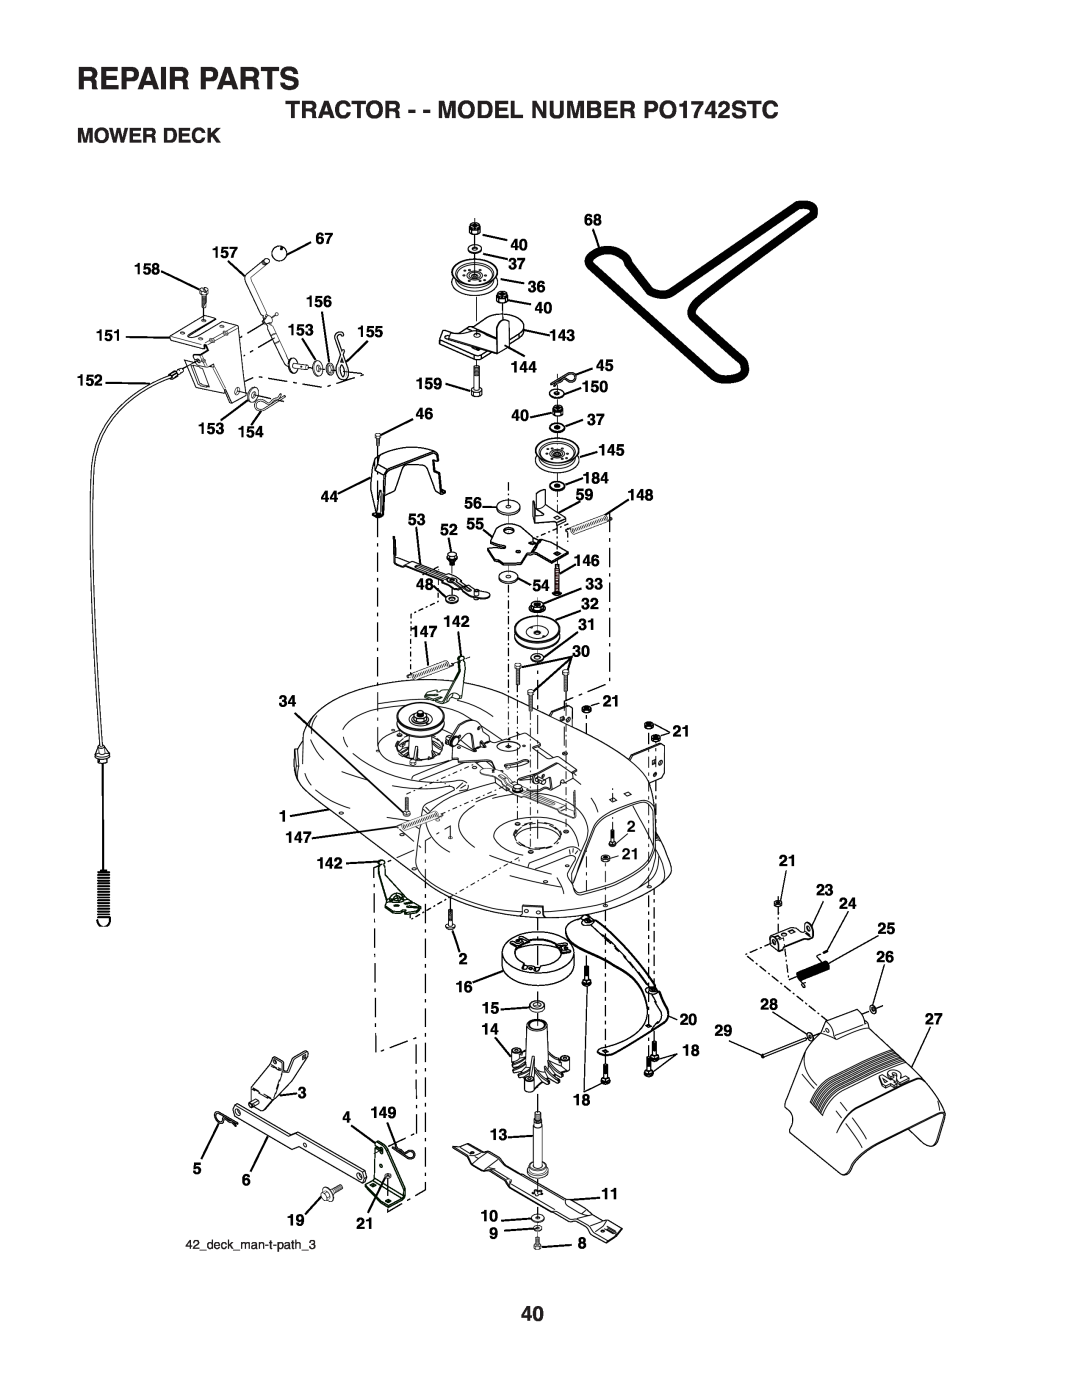 Poulan manual Mower Deck, Repair Parts, TRACTOR - - MODEL NUMBER PO1742STC, 42deckman-t-path3 